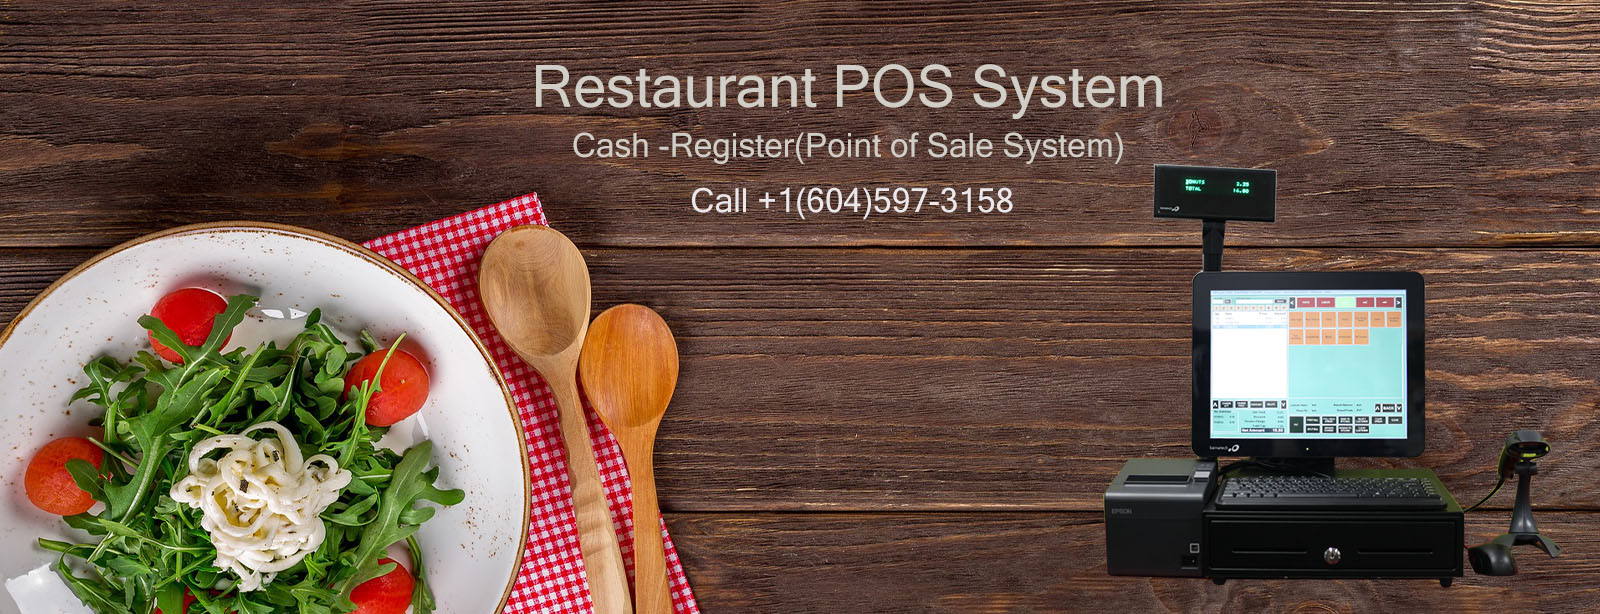 Restaurant POS System, Cash Register, Point of Sale System